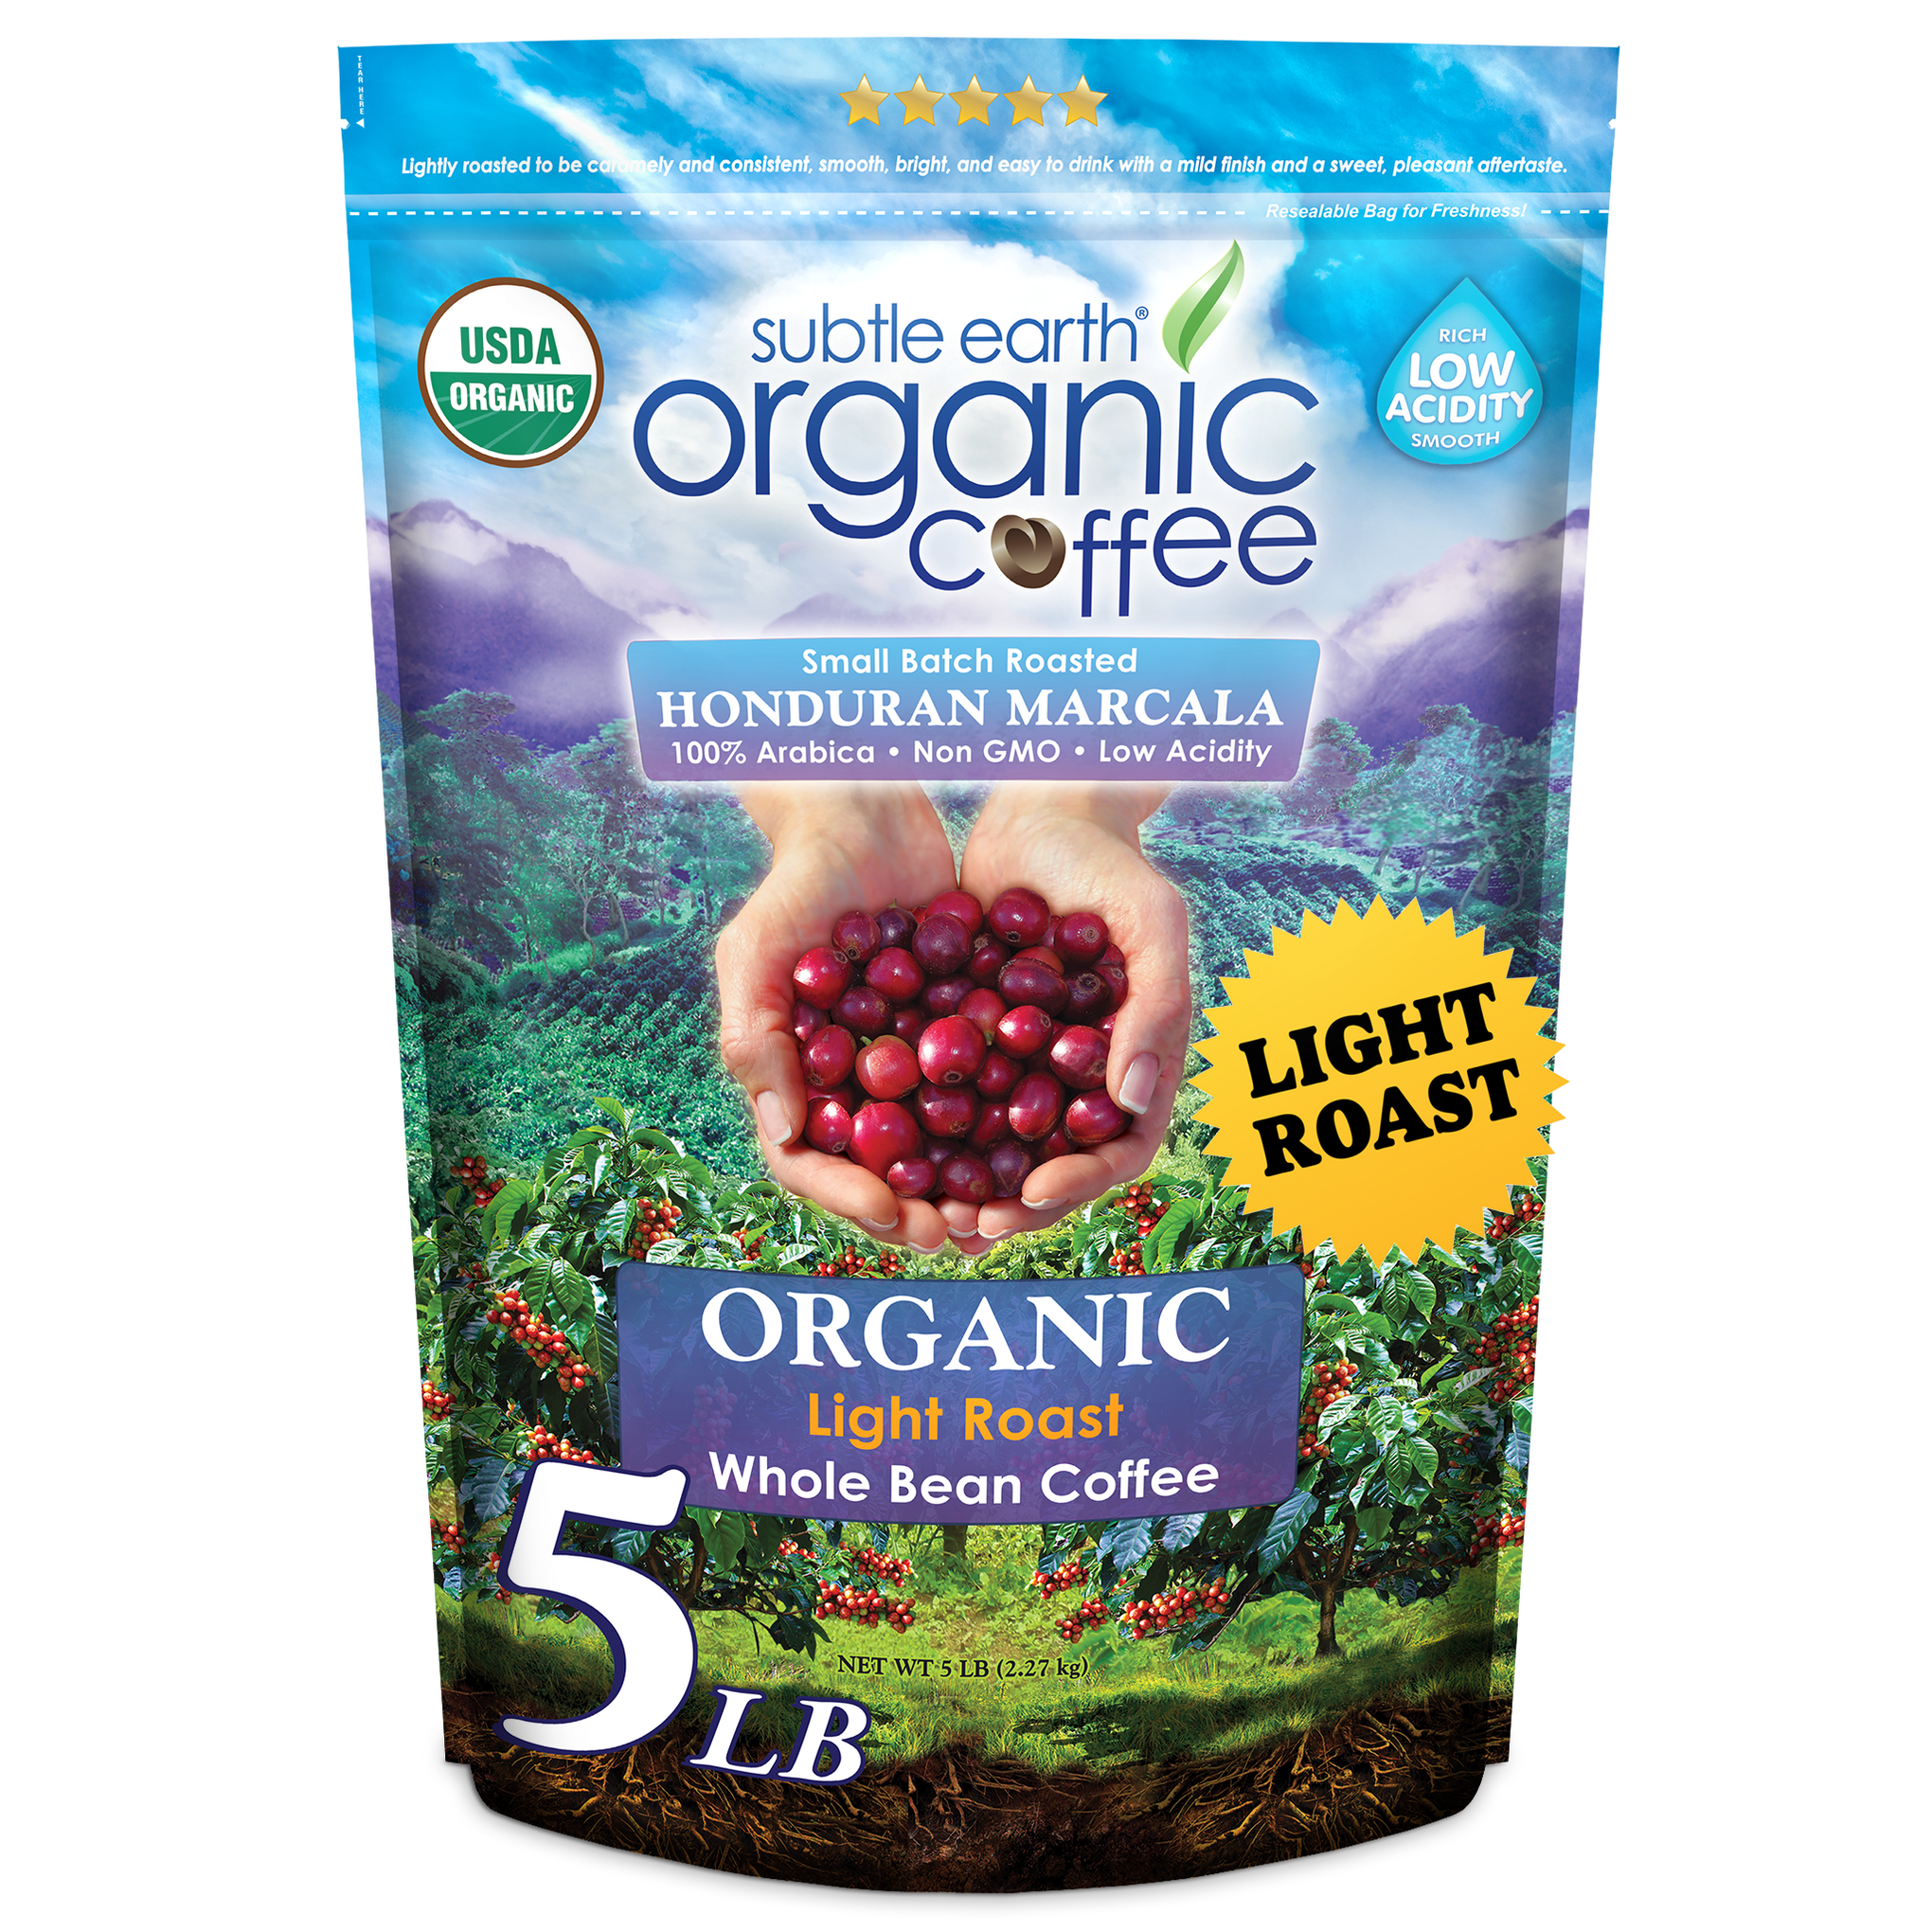 Subtle Earth Organic Light Roast Coffee 5LB Bag hide